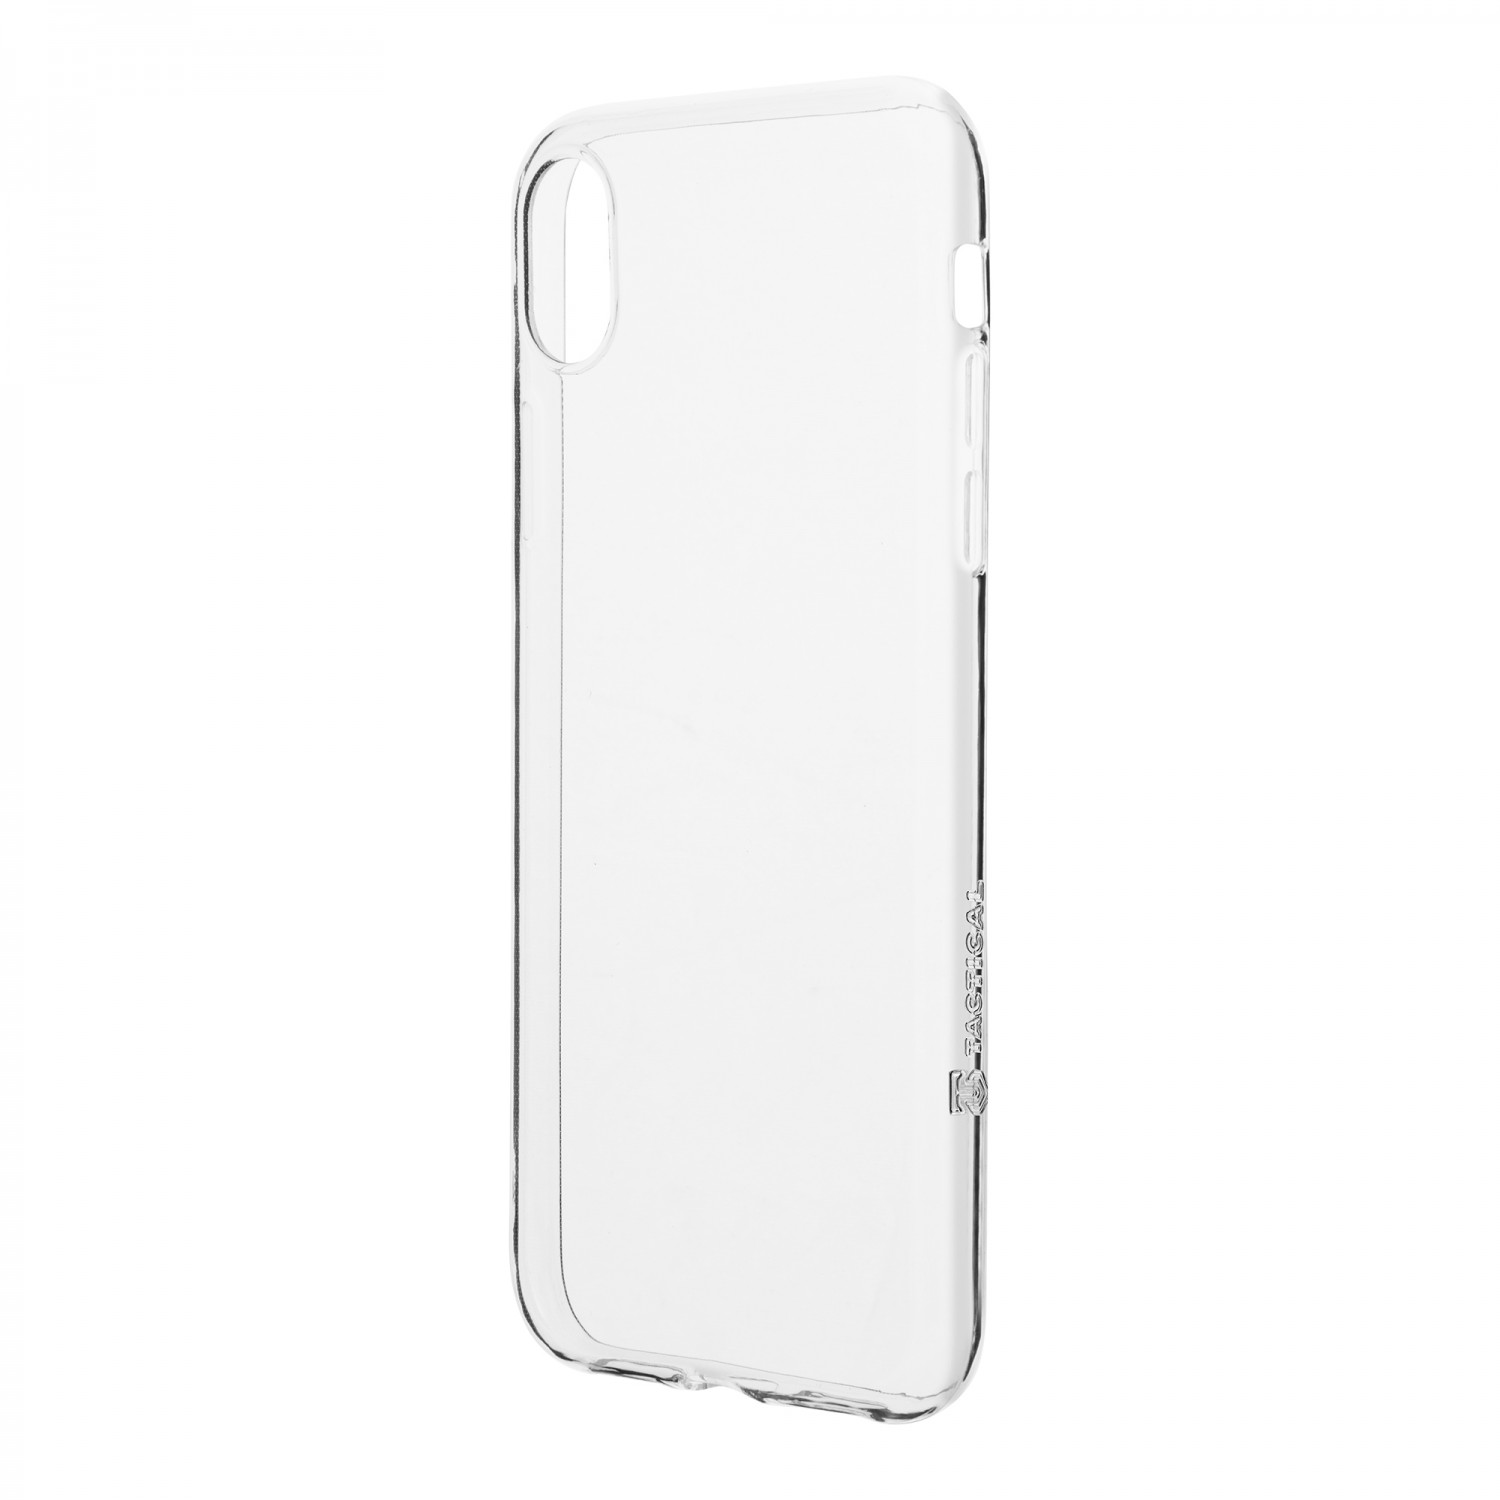 Tactical silikonové pouzdro, obal, kryt Apple iPhone XR transparent 